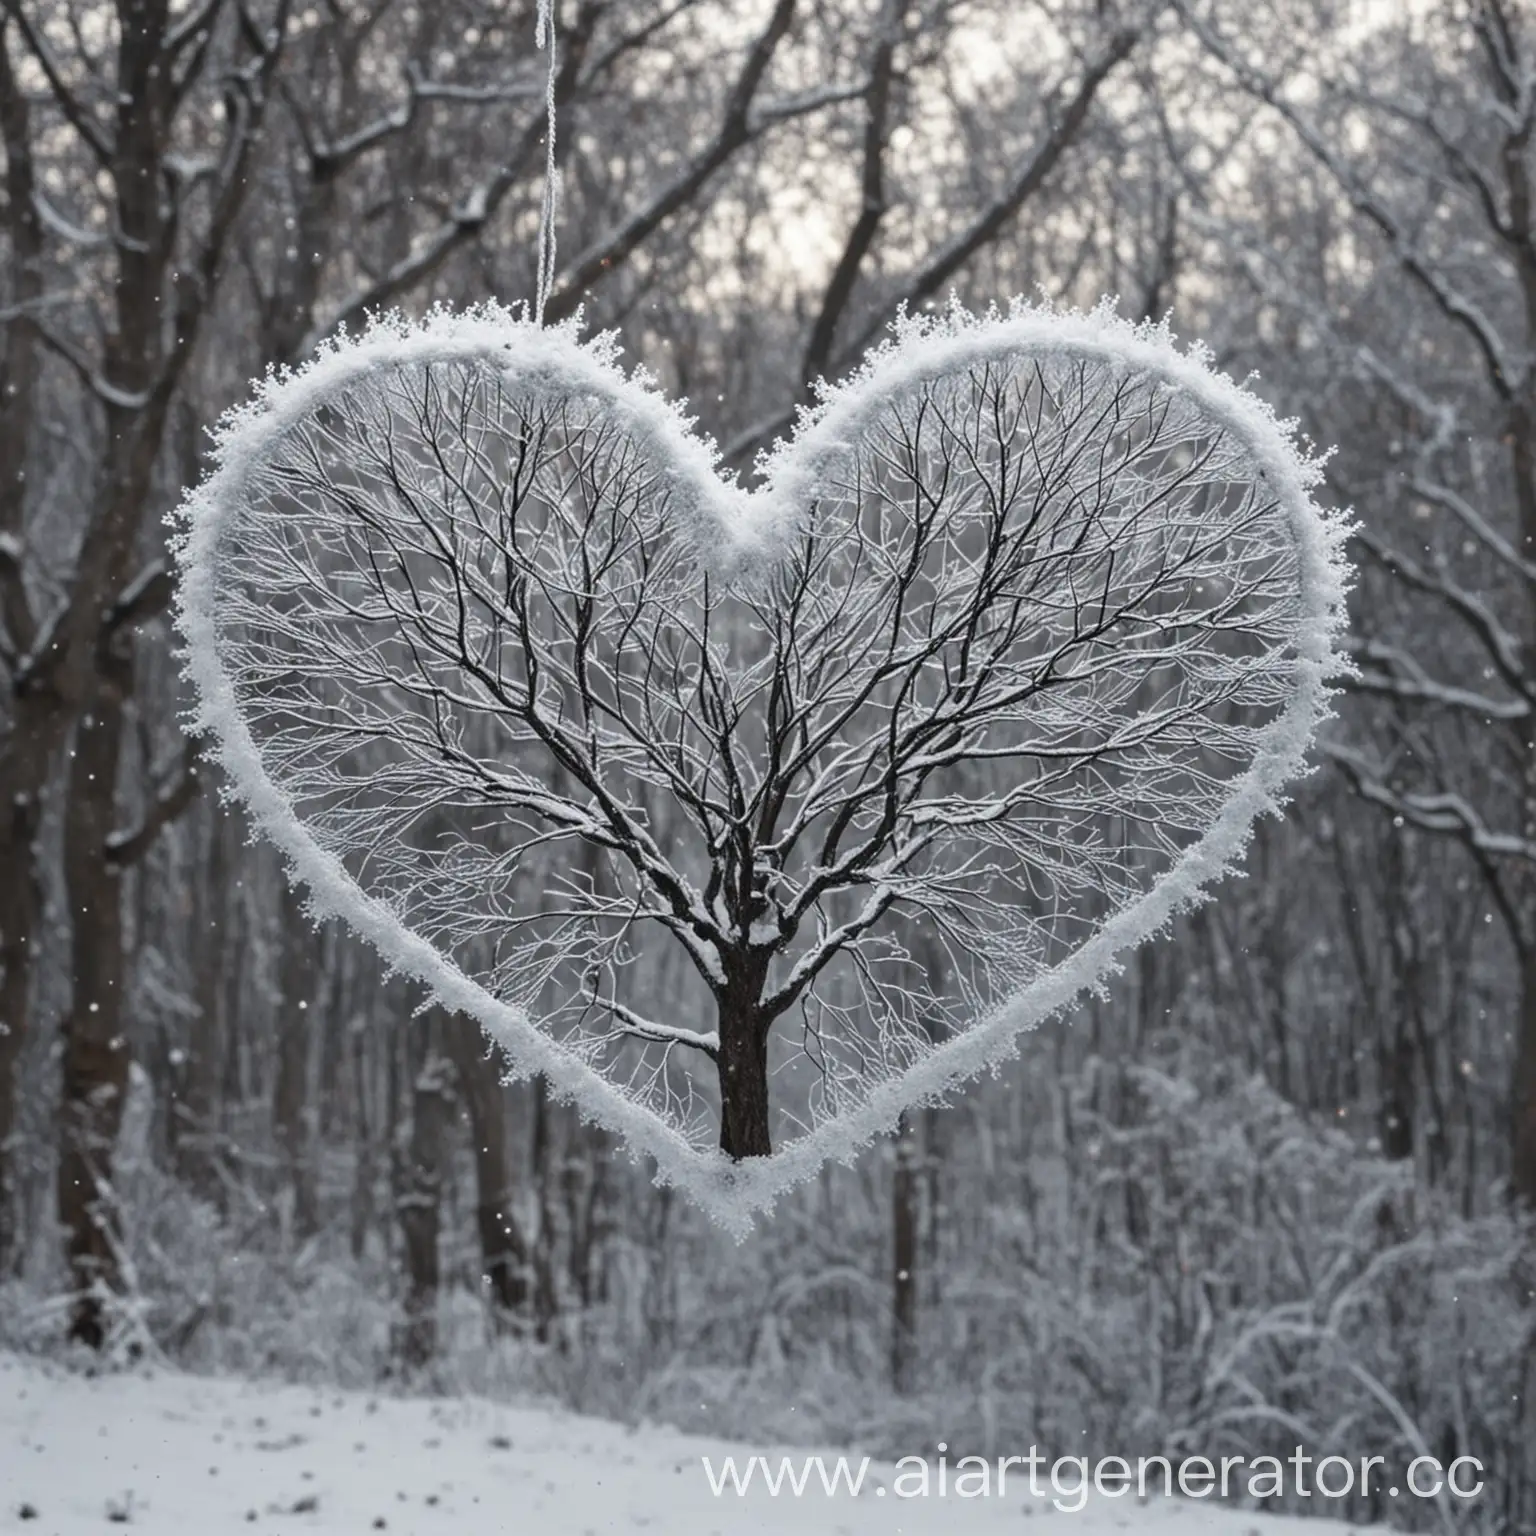 Heartfelt-Winter-Melancholy-Emotive-Reflection-in-a-Seasonal-Setting